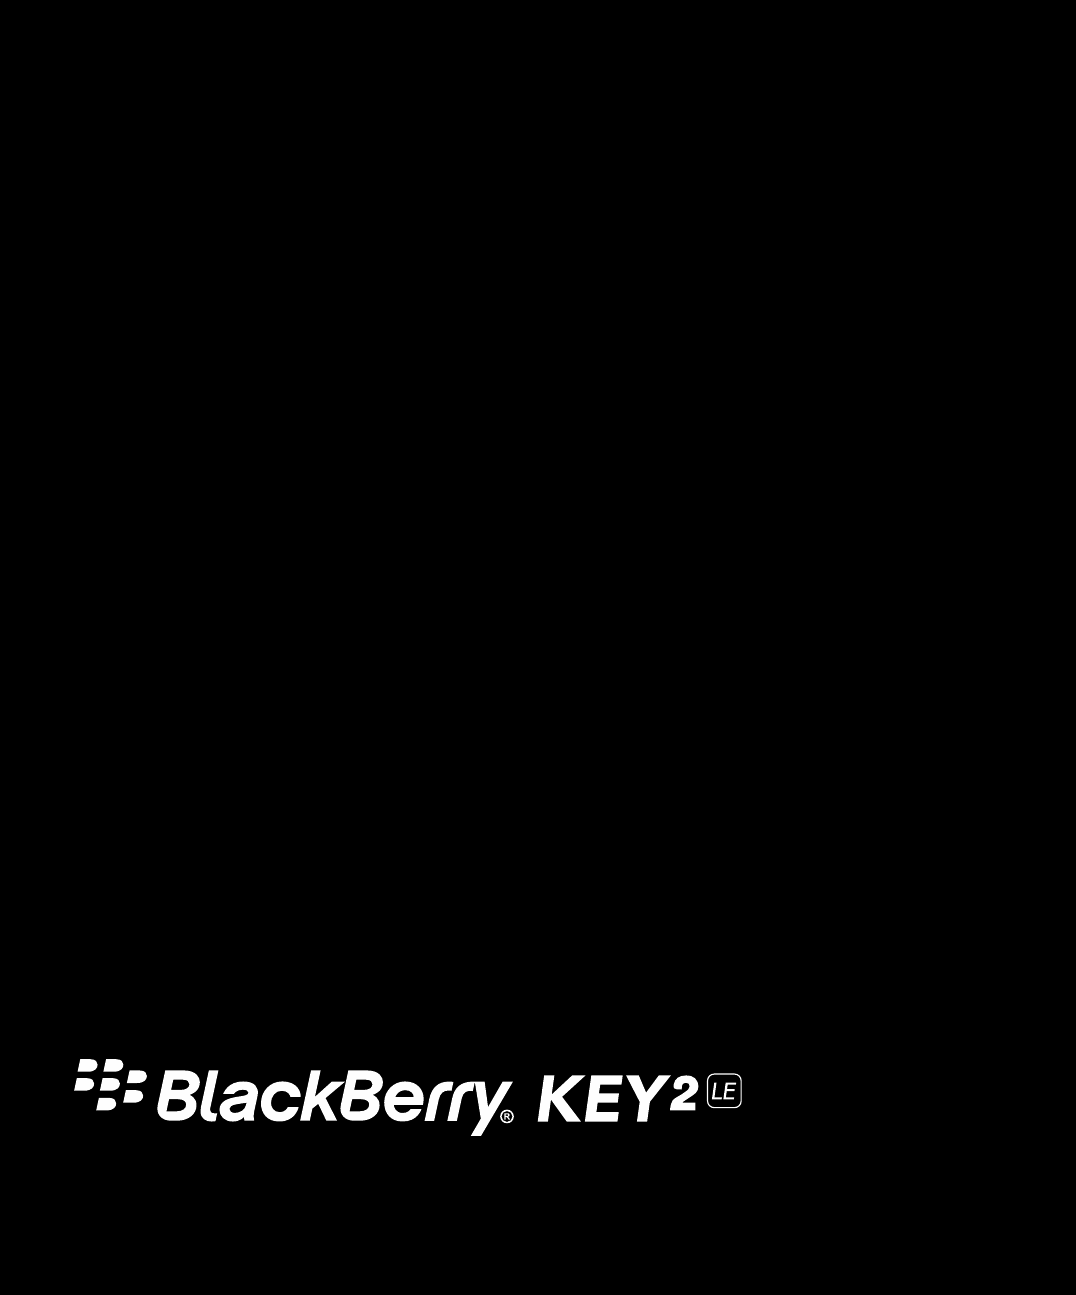 how can i reset my locker password on blackberry key2